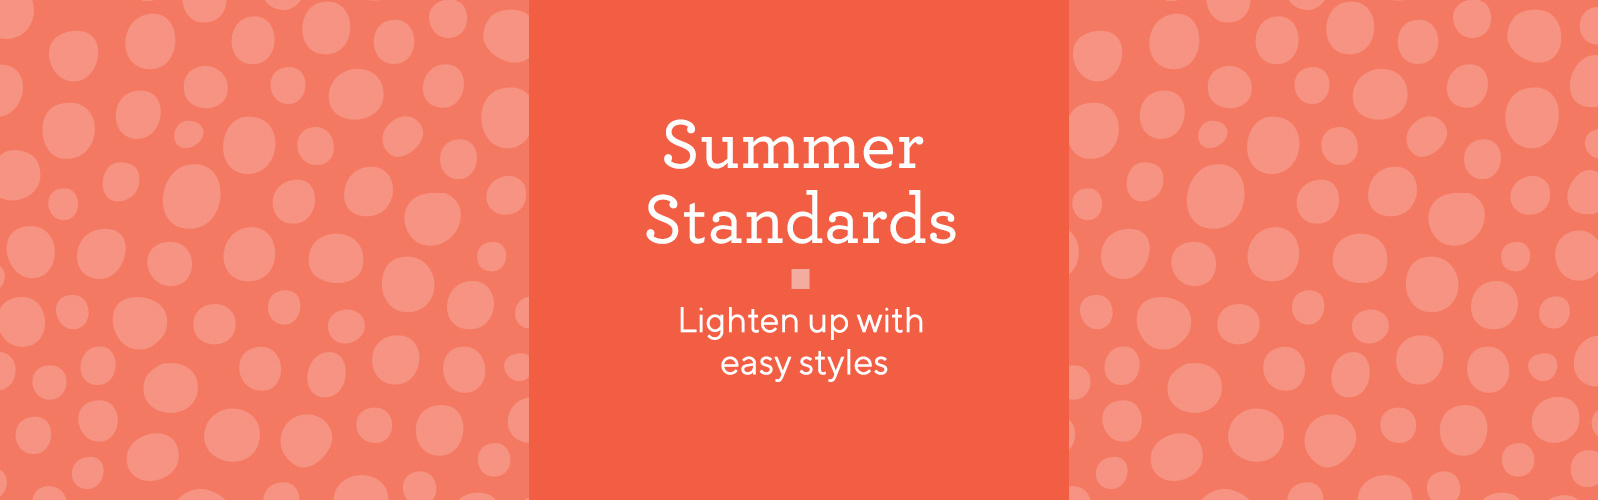 Summer Standards Lighten up with easy styles